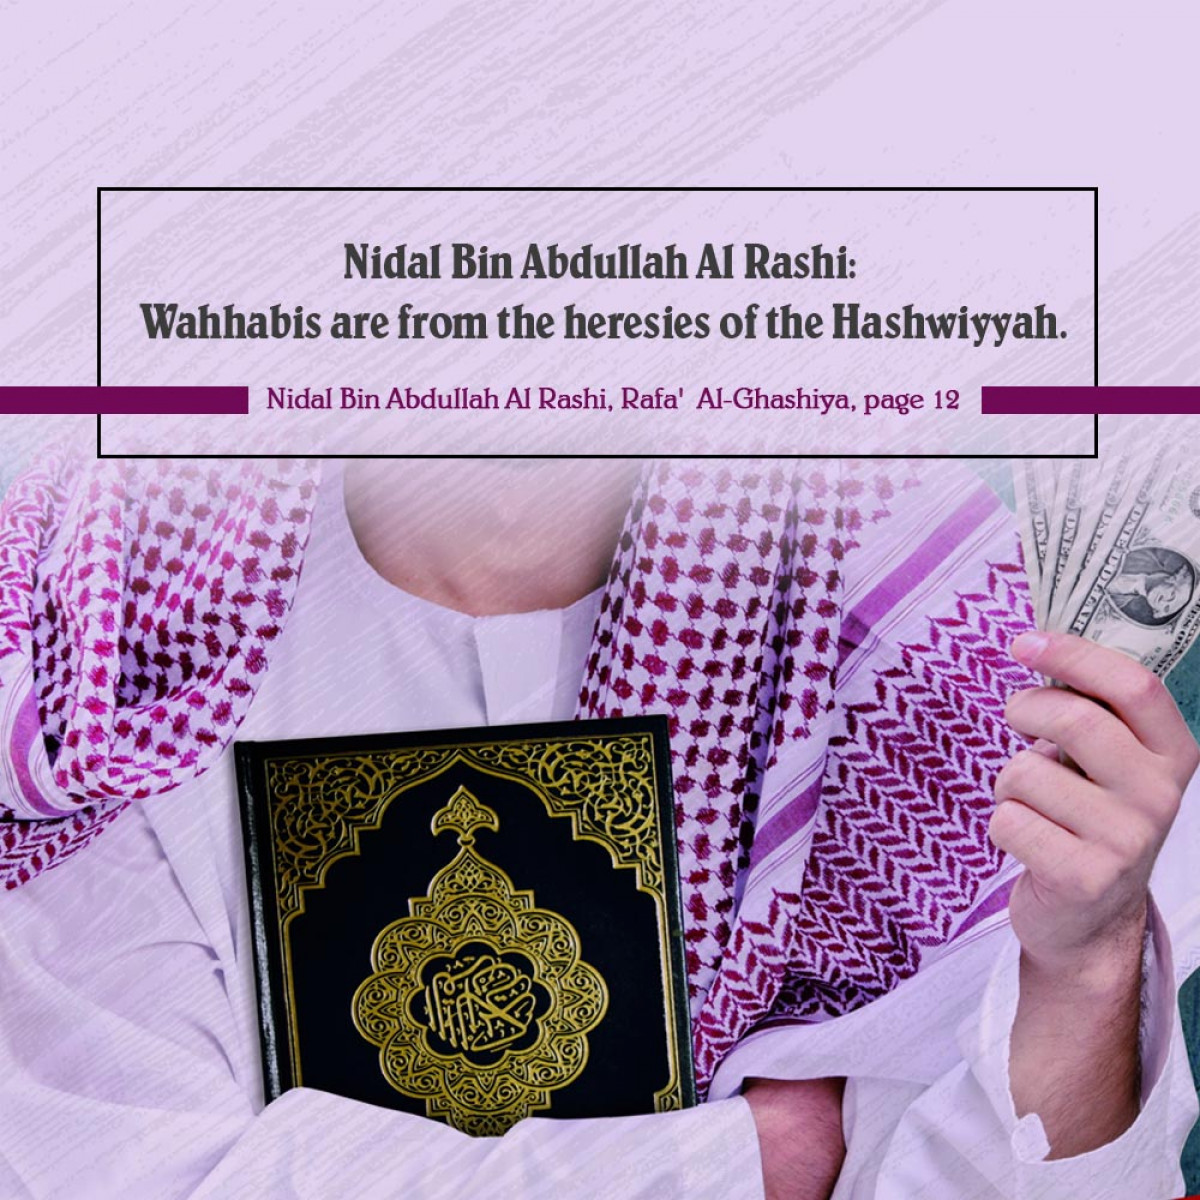 Nidal Bin Abdullah Al Rashi: Wahhabis are from the heresies of the Hashwiyyah